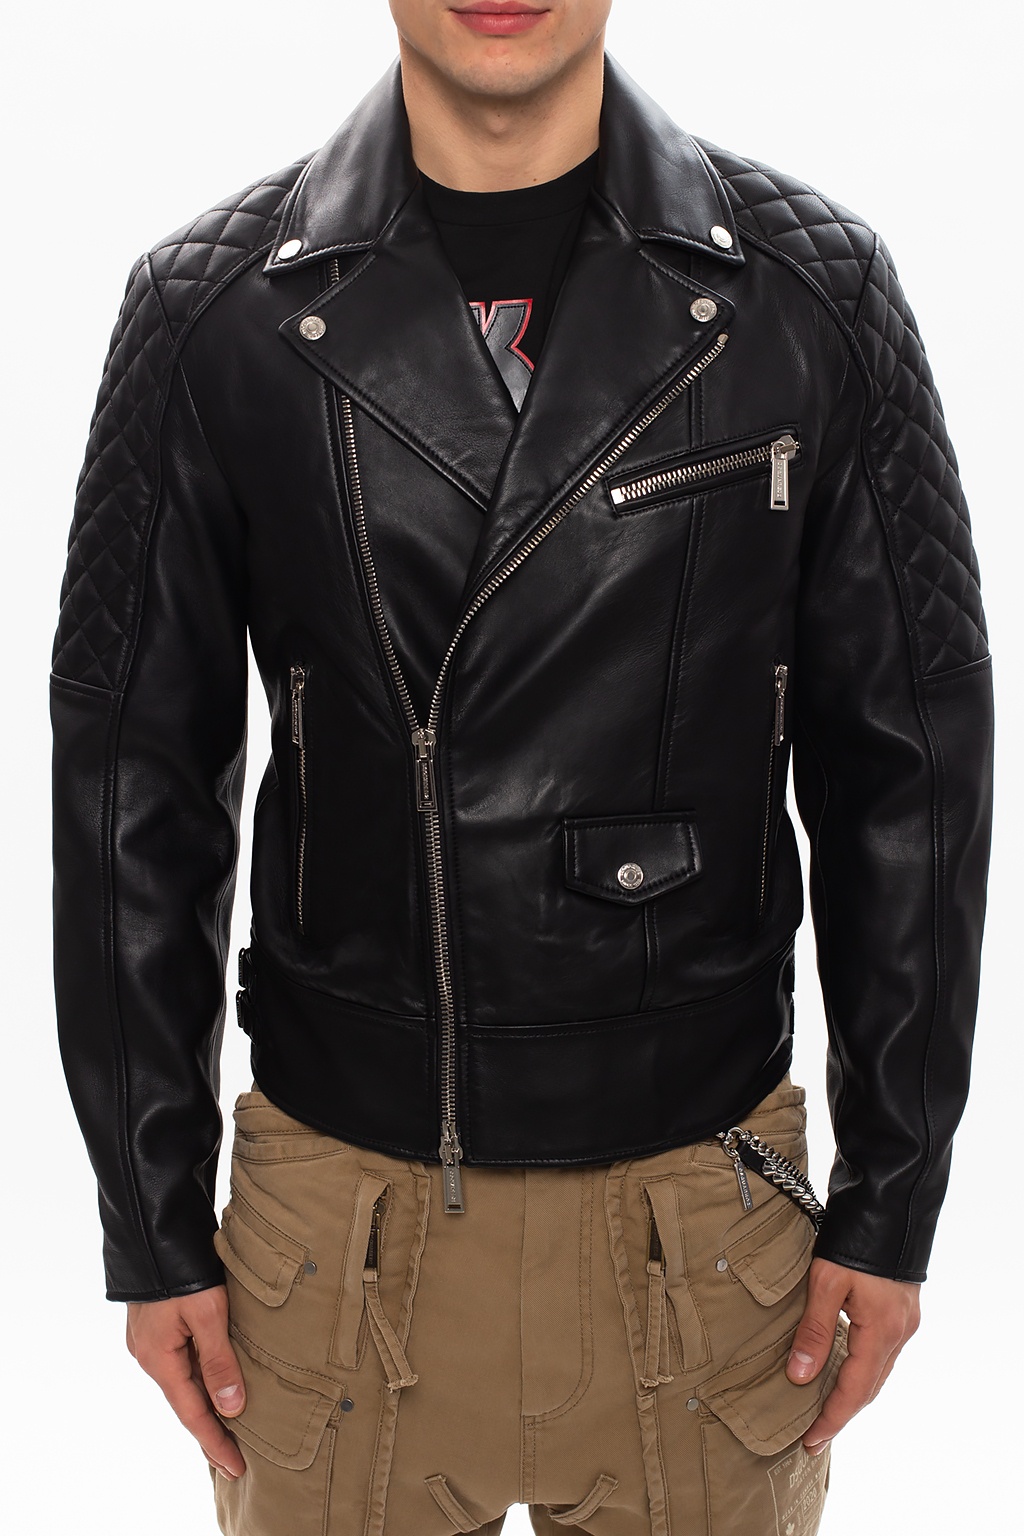 dsquared leather jacket